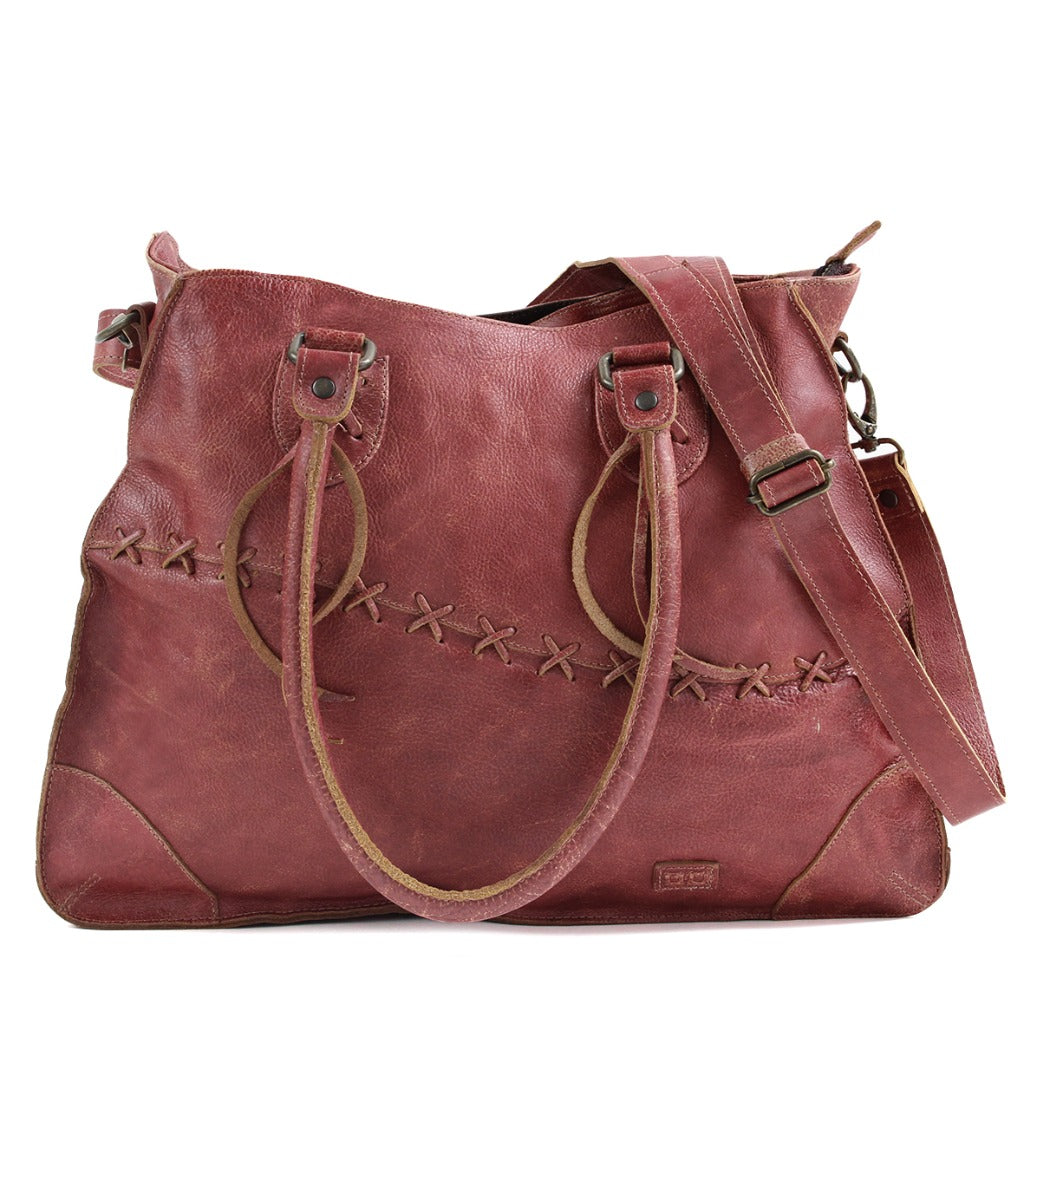 A burgundy Bed Stu Bruna leather bag with straps.